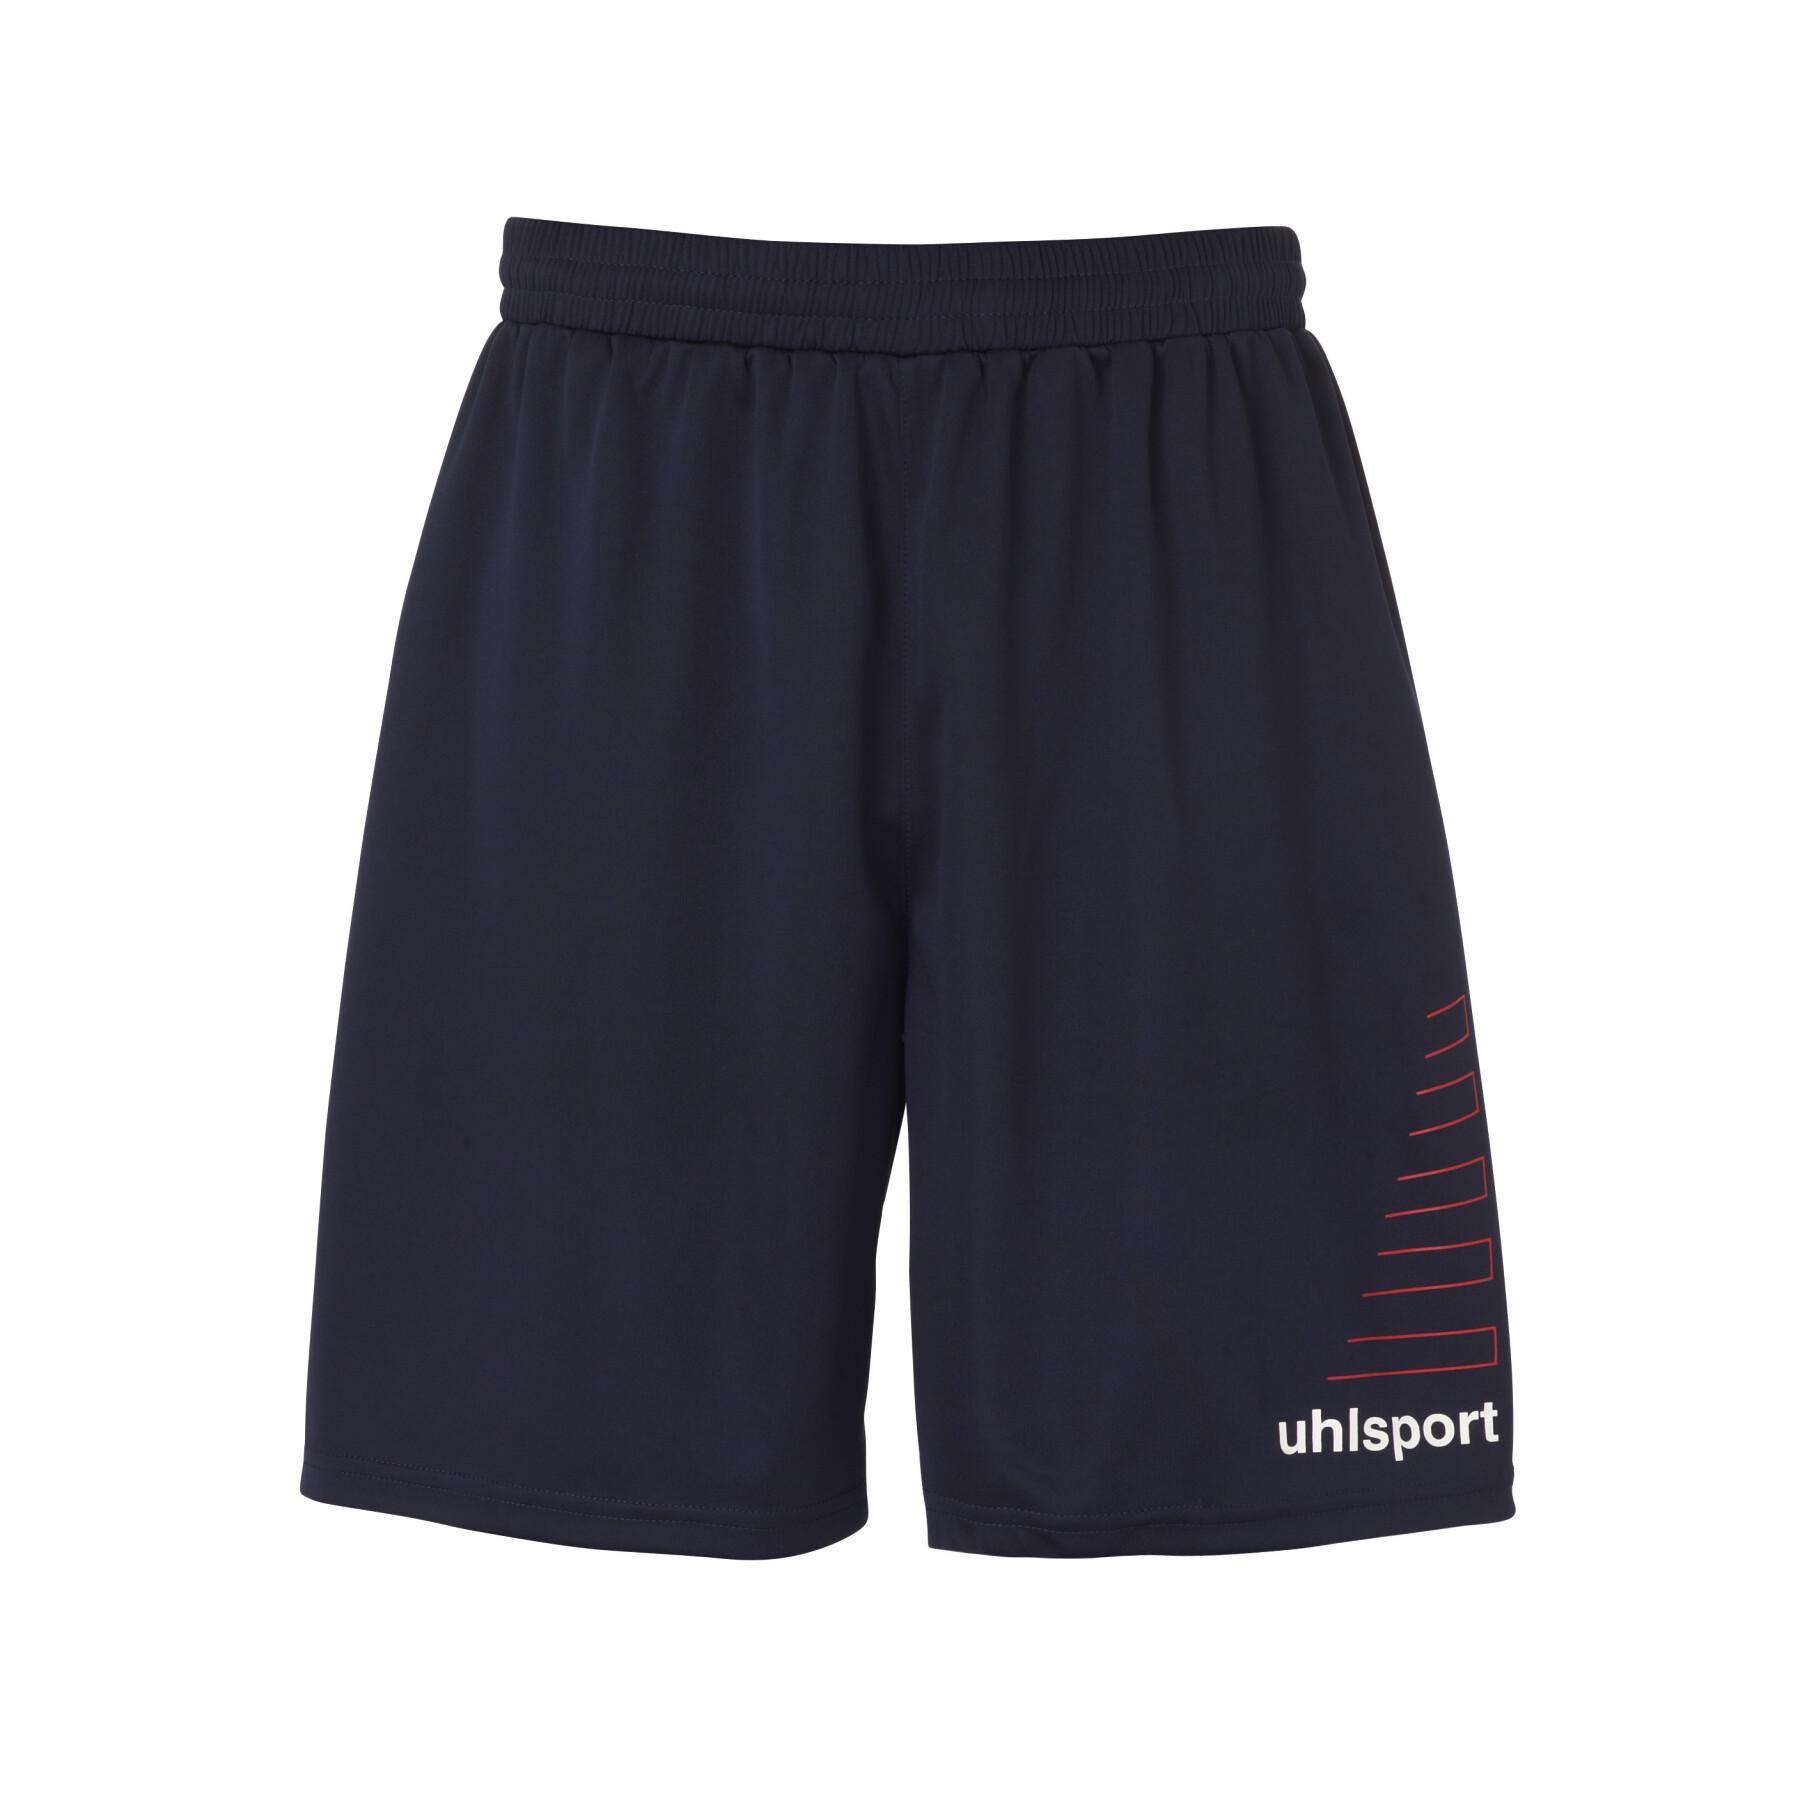 Kit de maillot y pantalón corto para niños Uhlsport Team Kit 